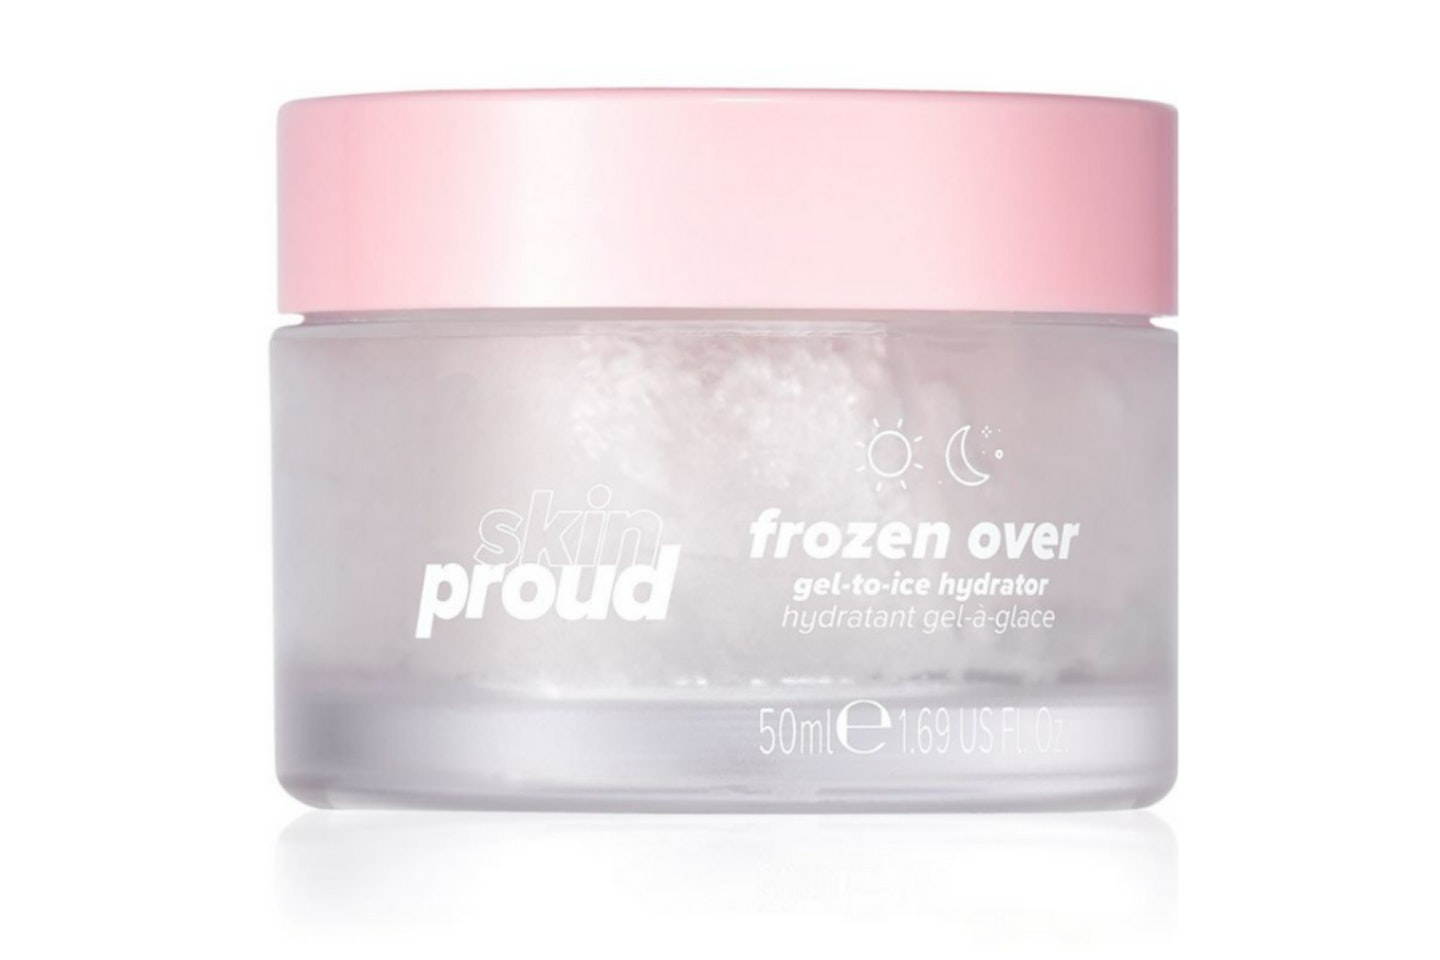 Skin Proud Frozen Over Gel-To-Ice Hydrator